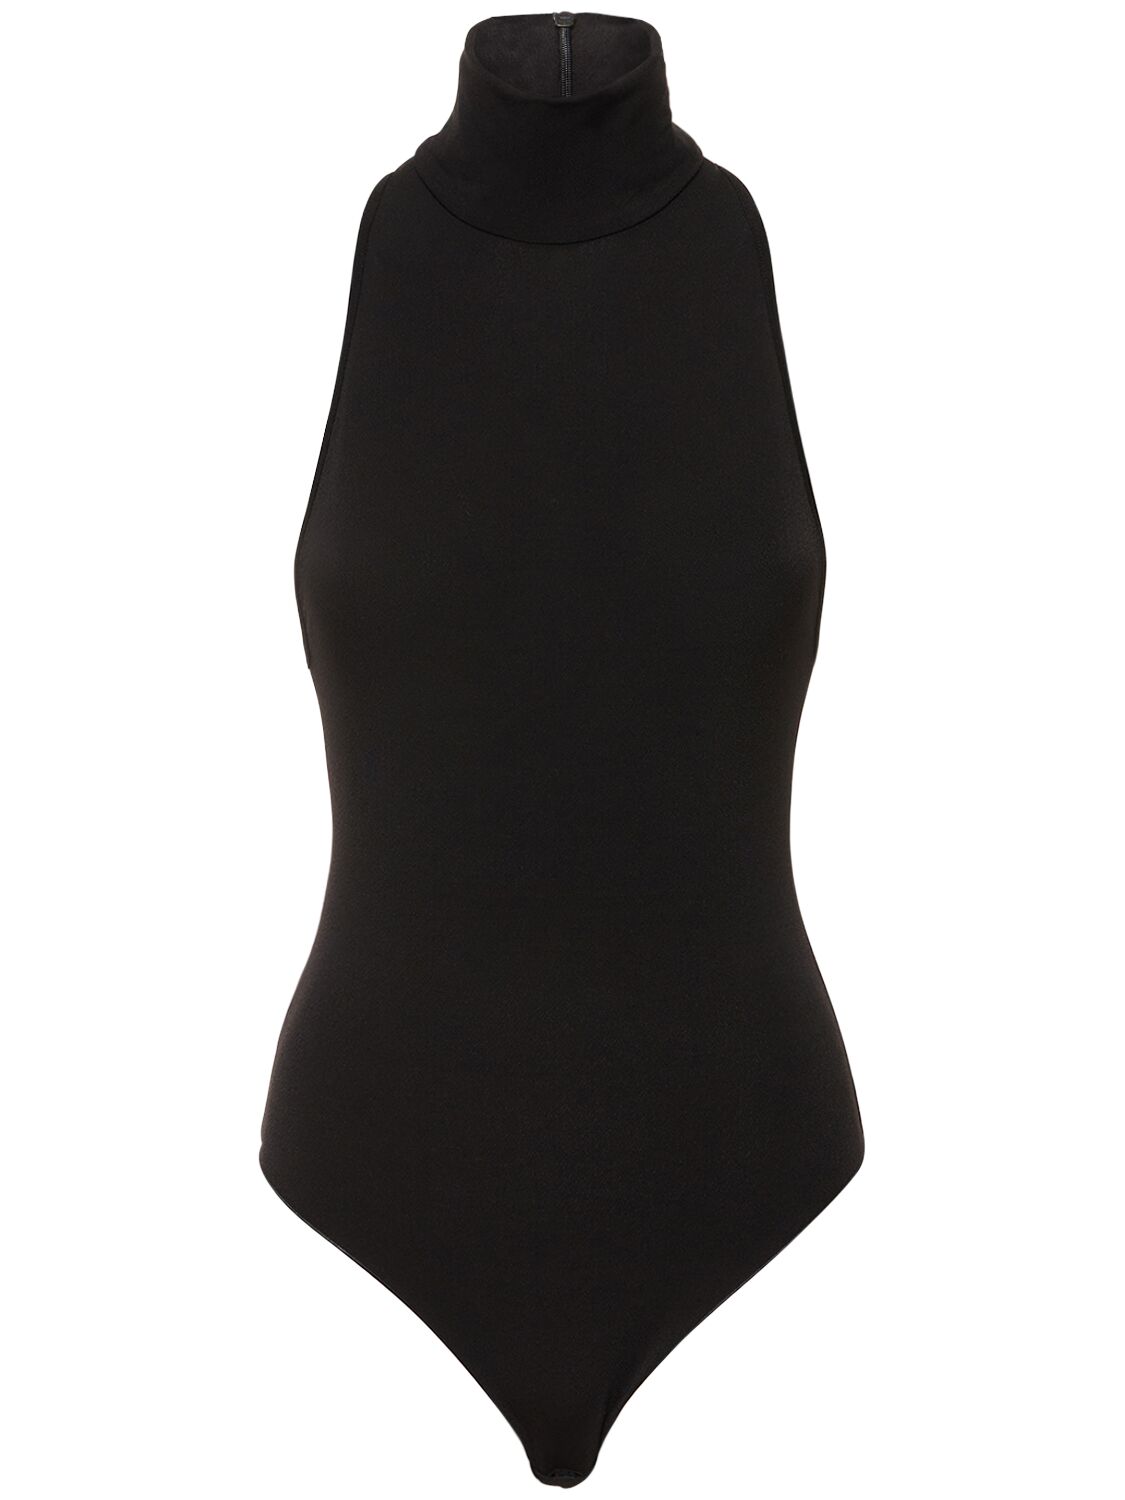 Image of Norah Sleeveless Bodysuit